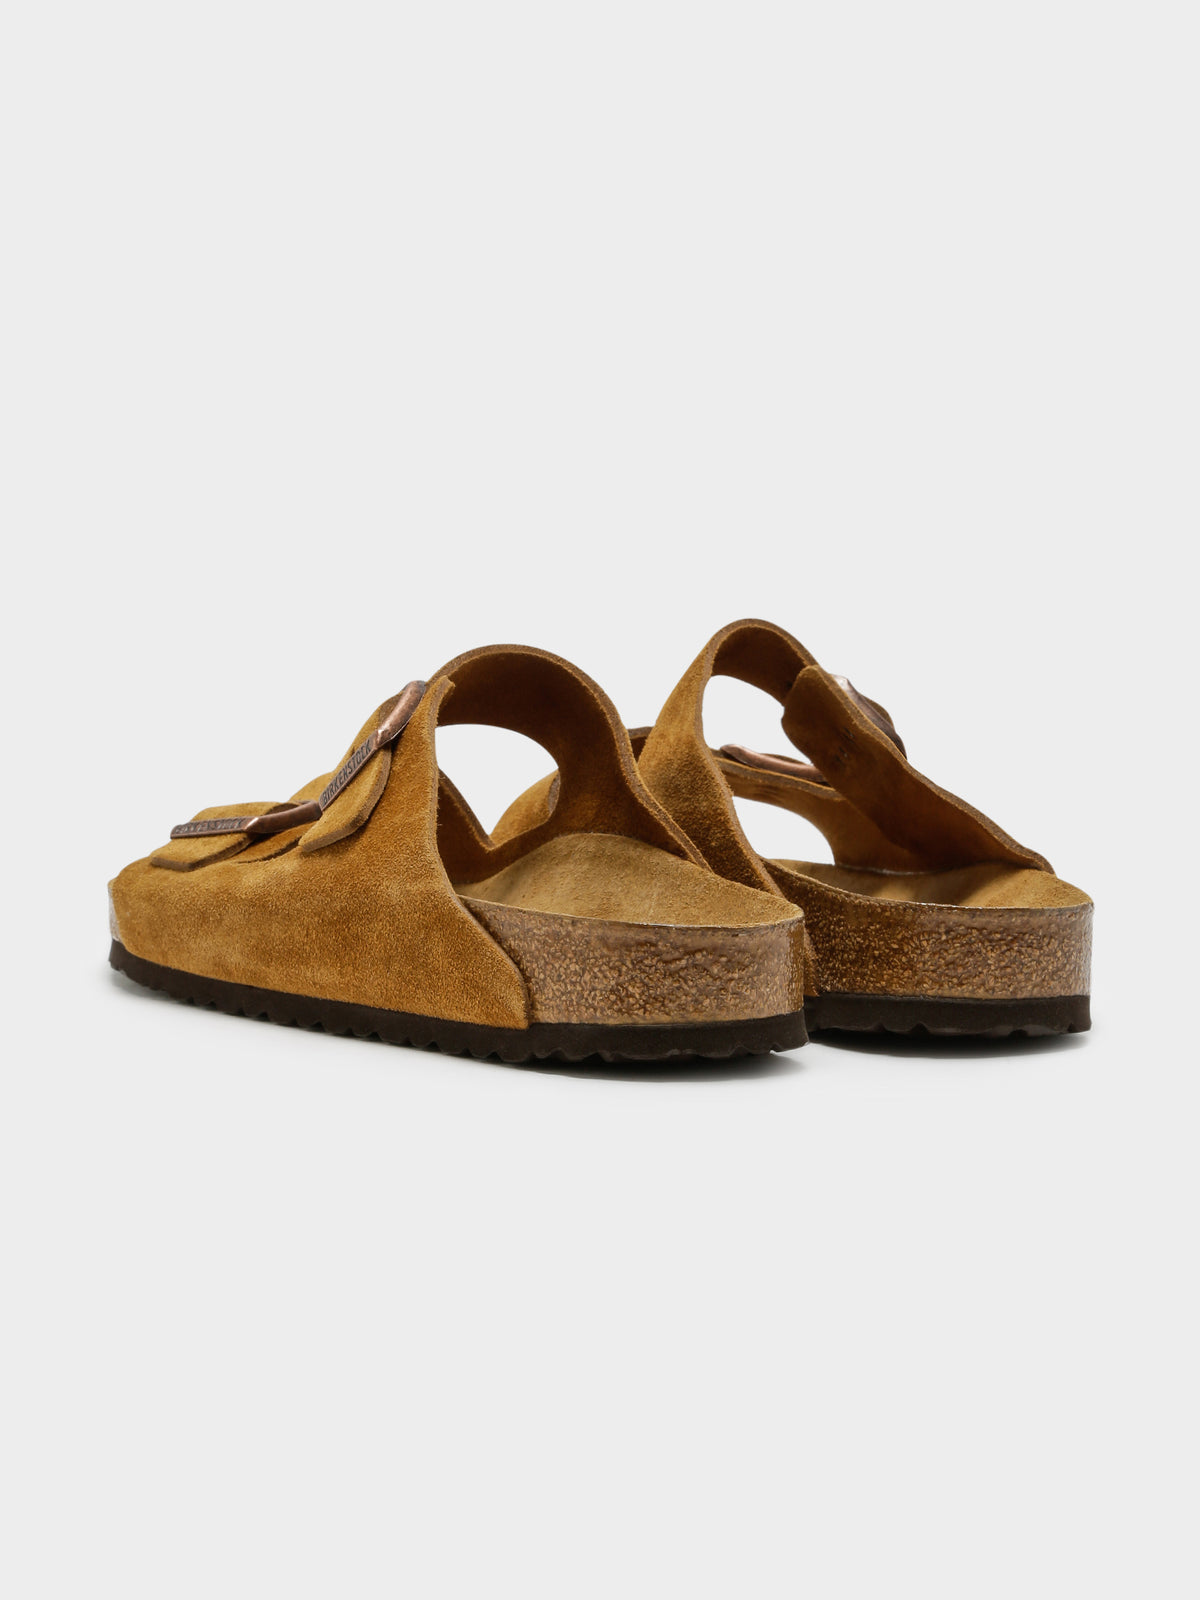 Unisex Arizona Two-Strap Narrow Sandals in Mink Brown